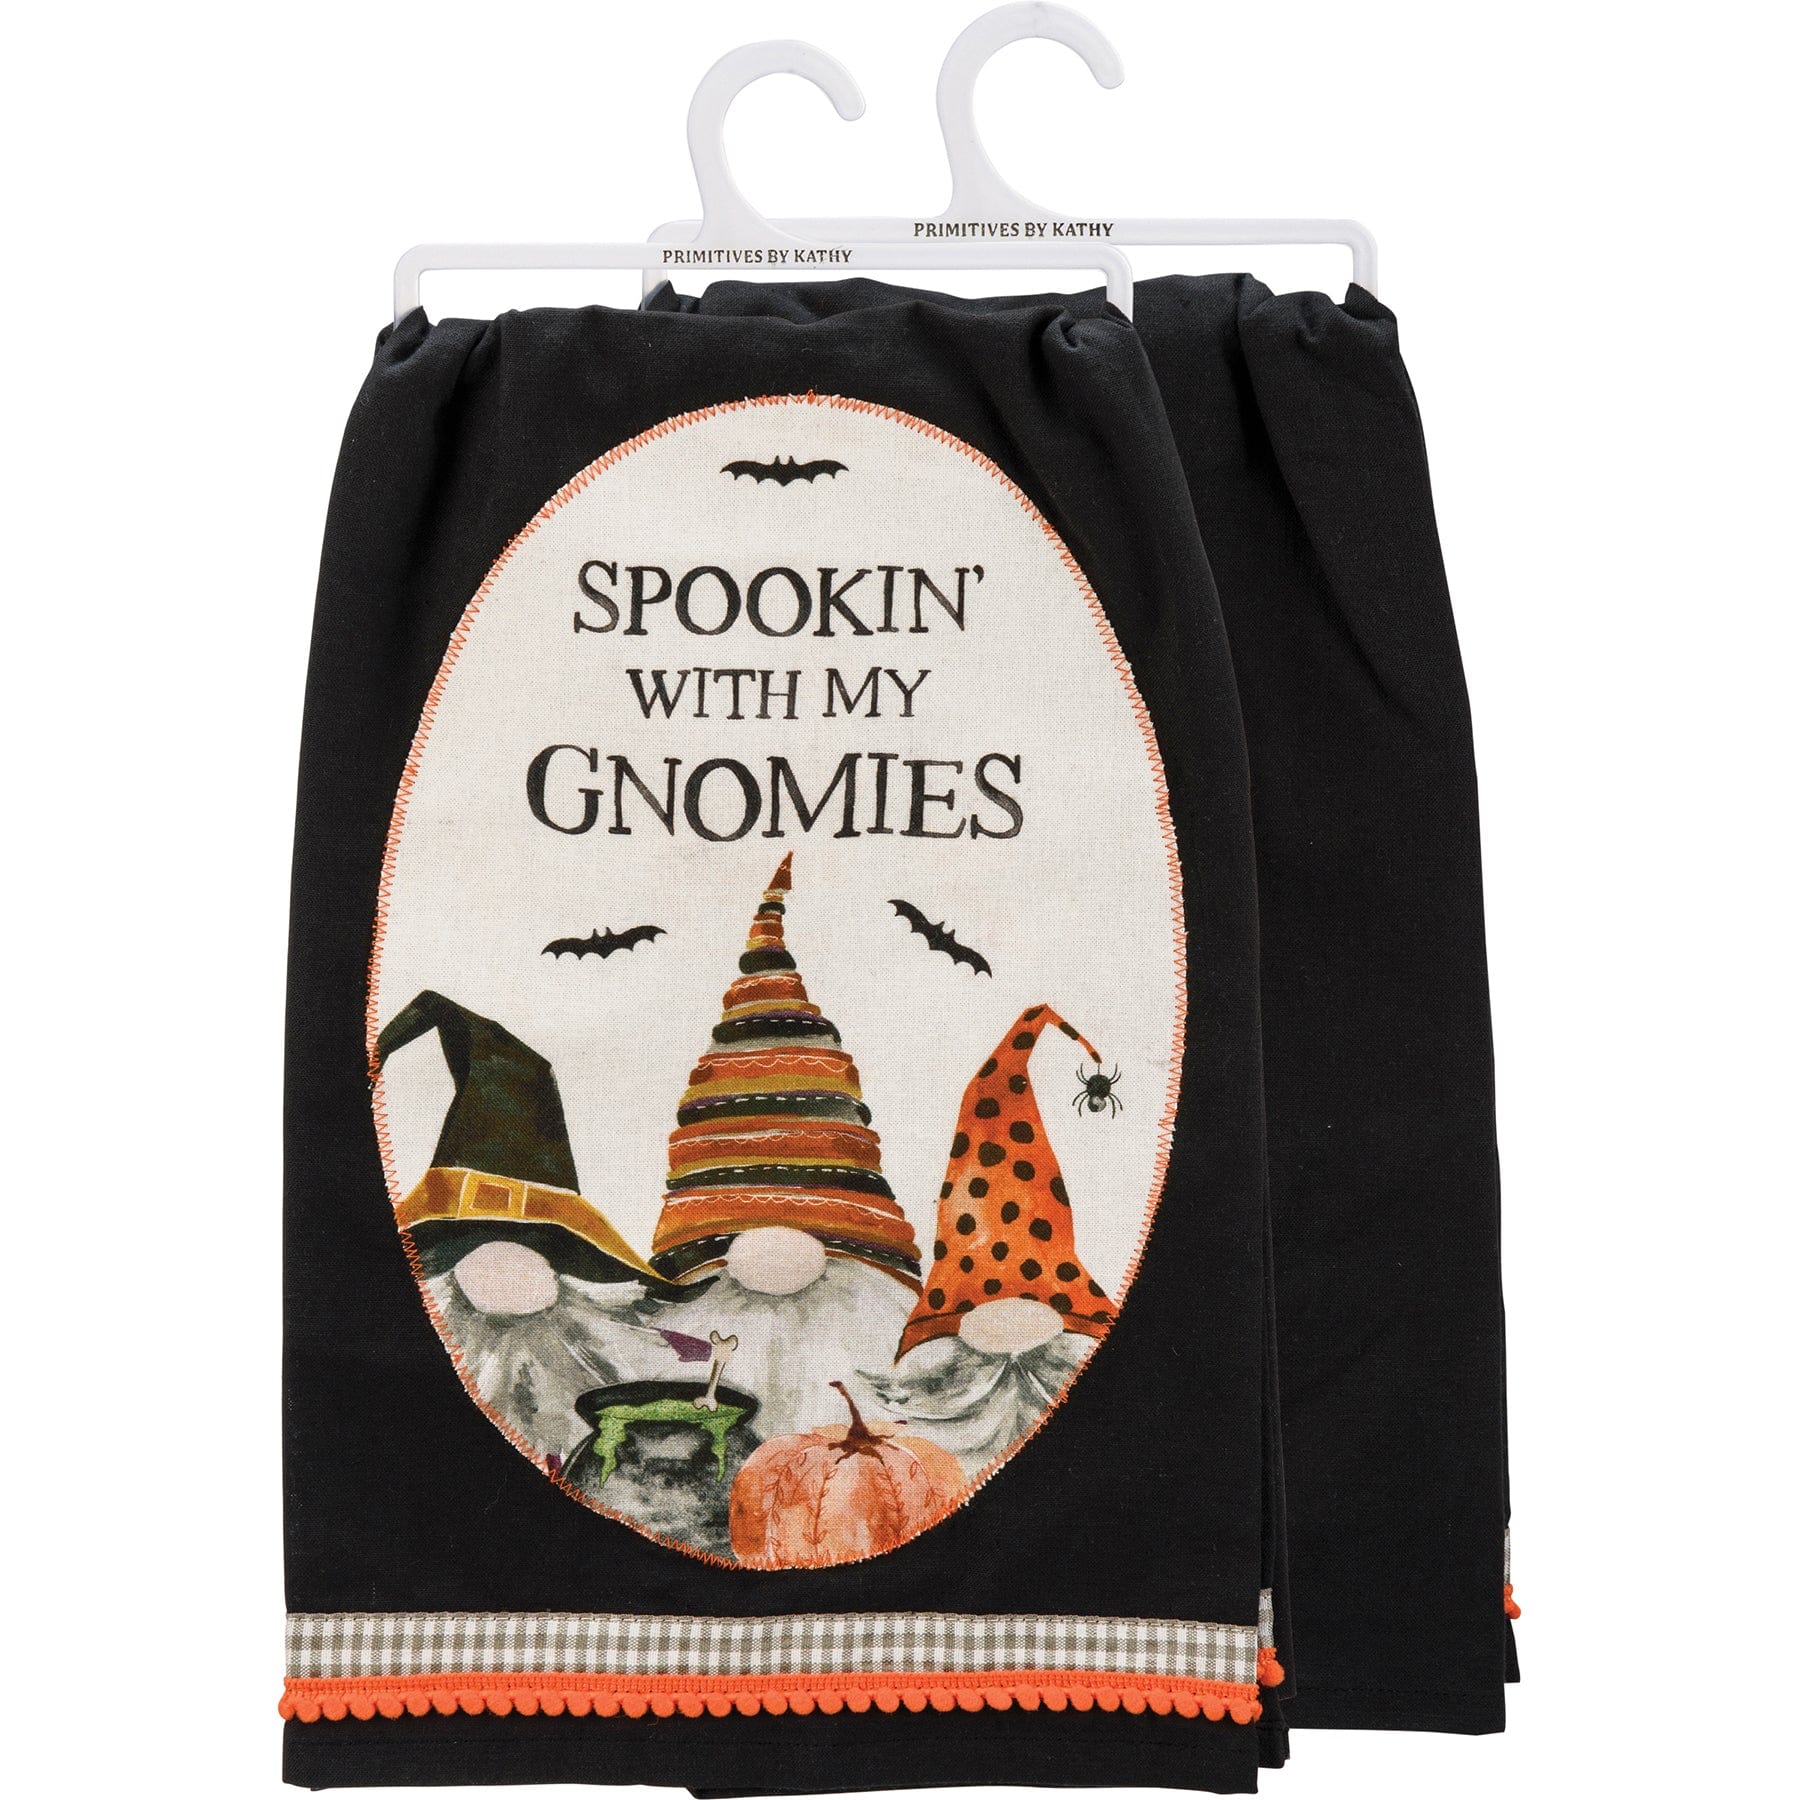 Kitchen Towels Kitchen Towel - Spookin' With My Gnomies PBK - 113124